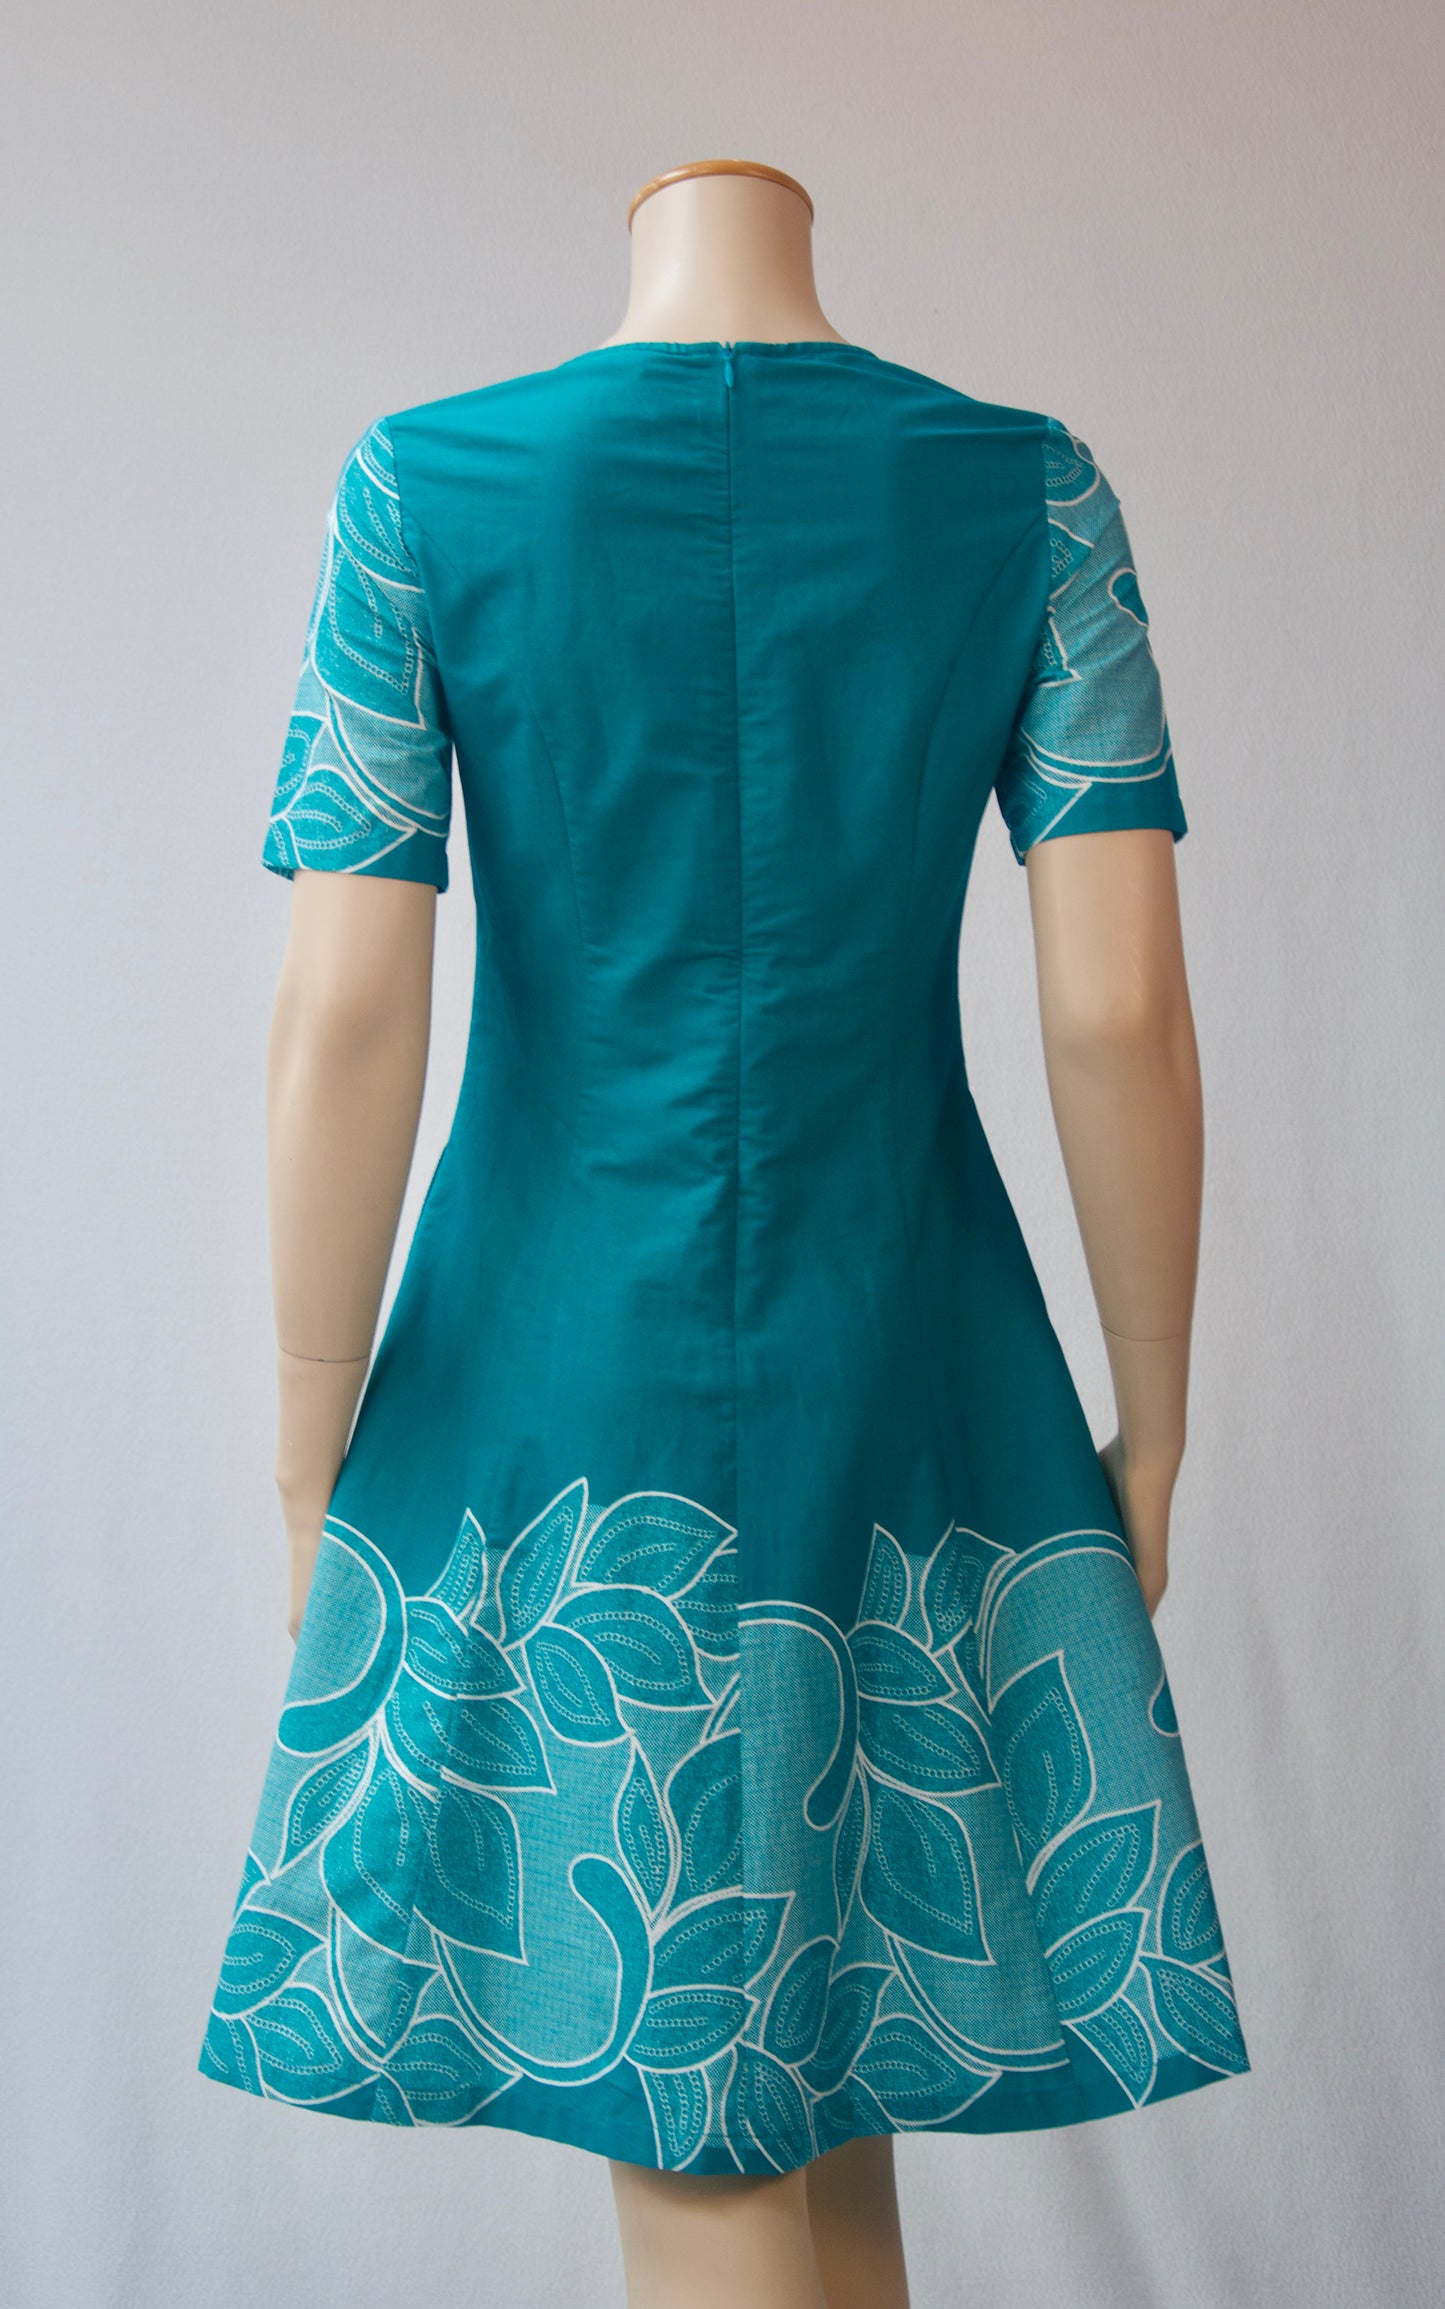 Teal Leaf Printed Cotton Dress